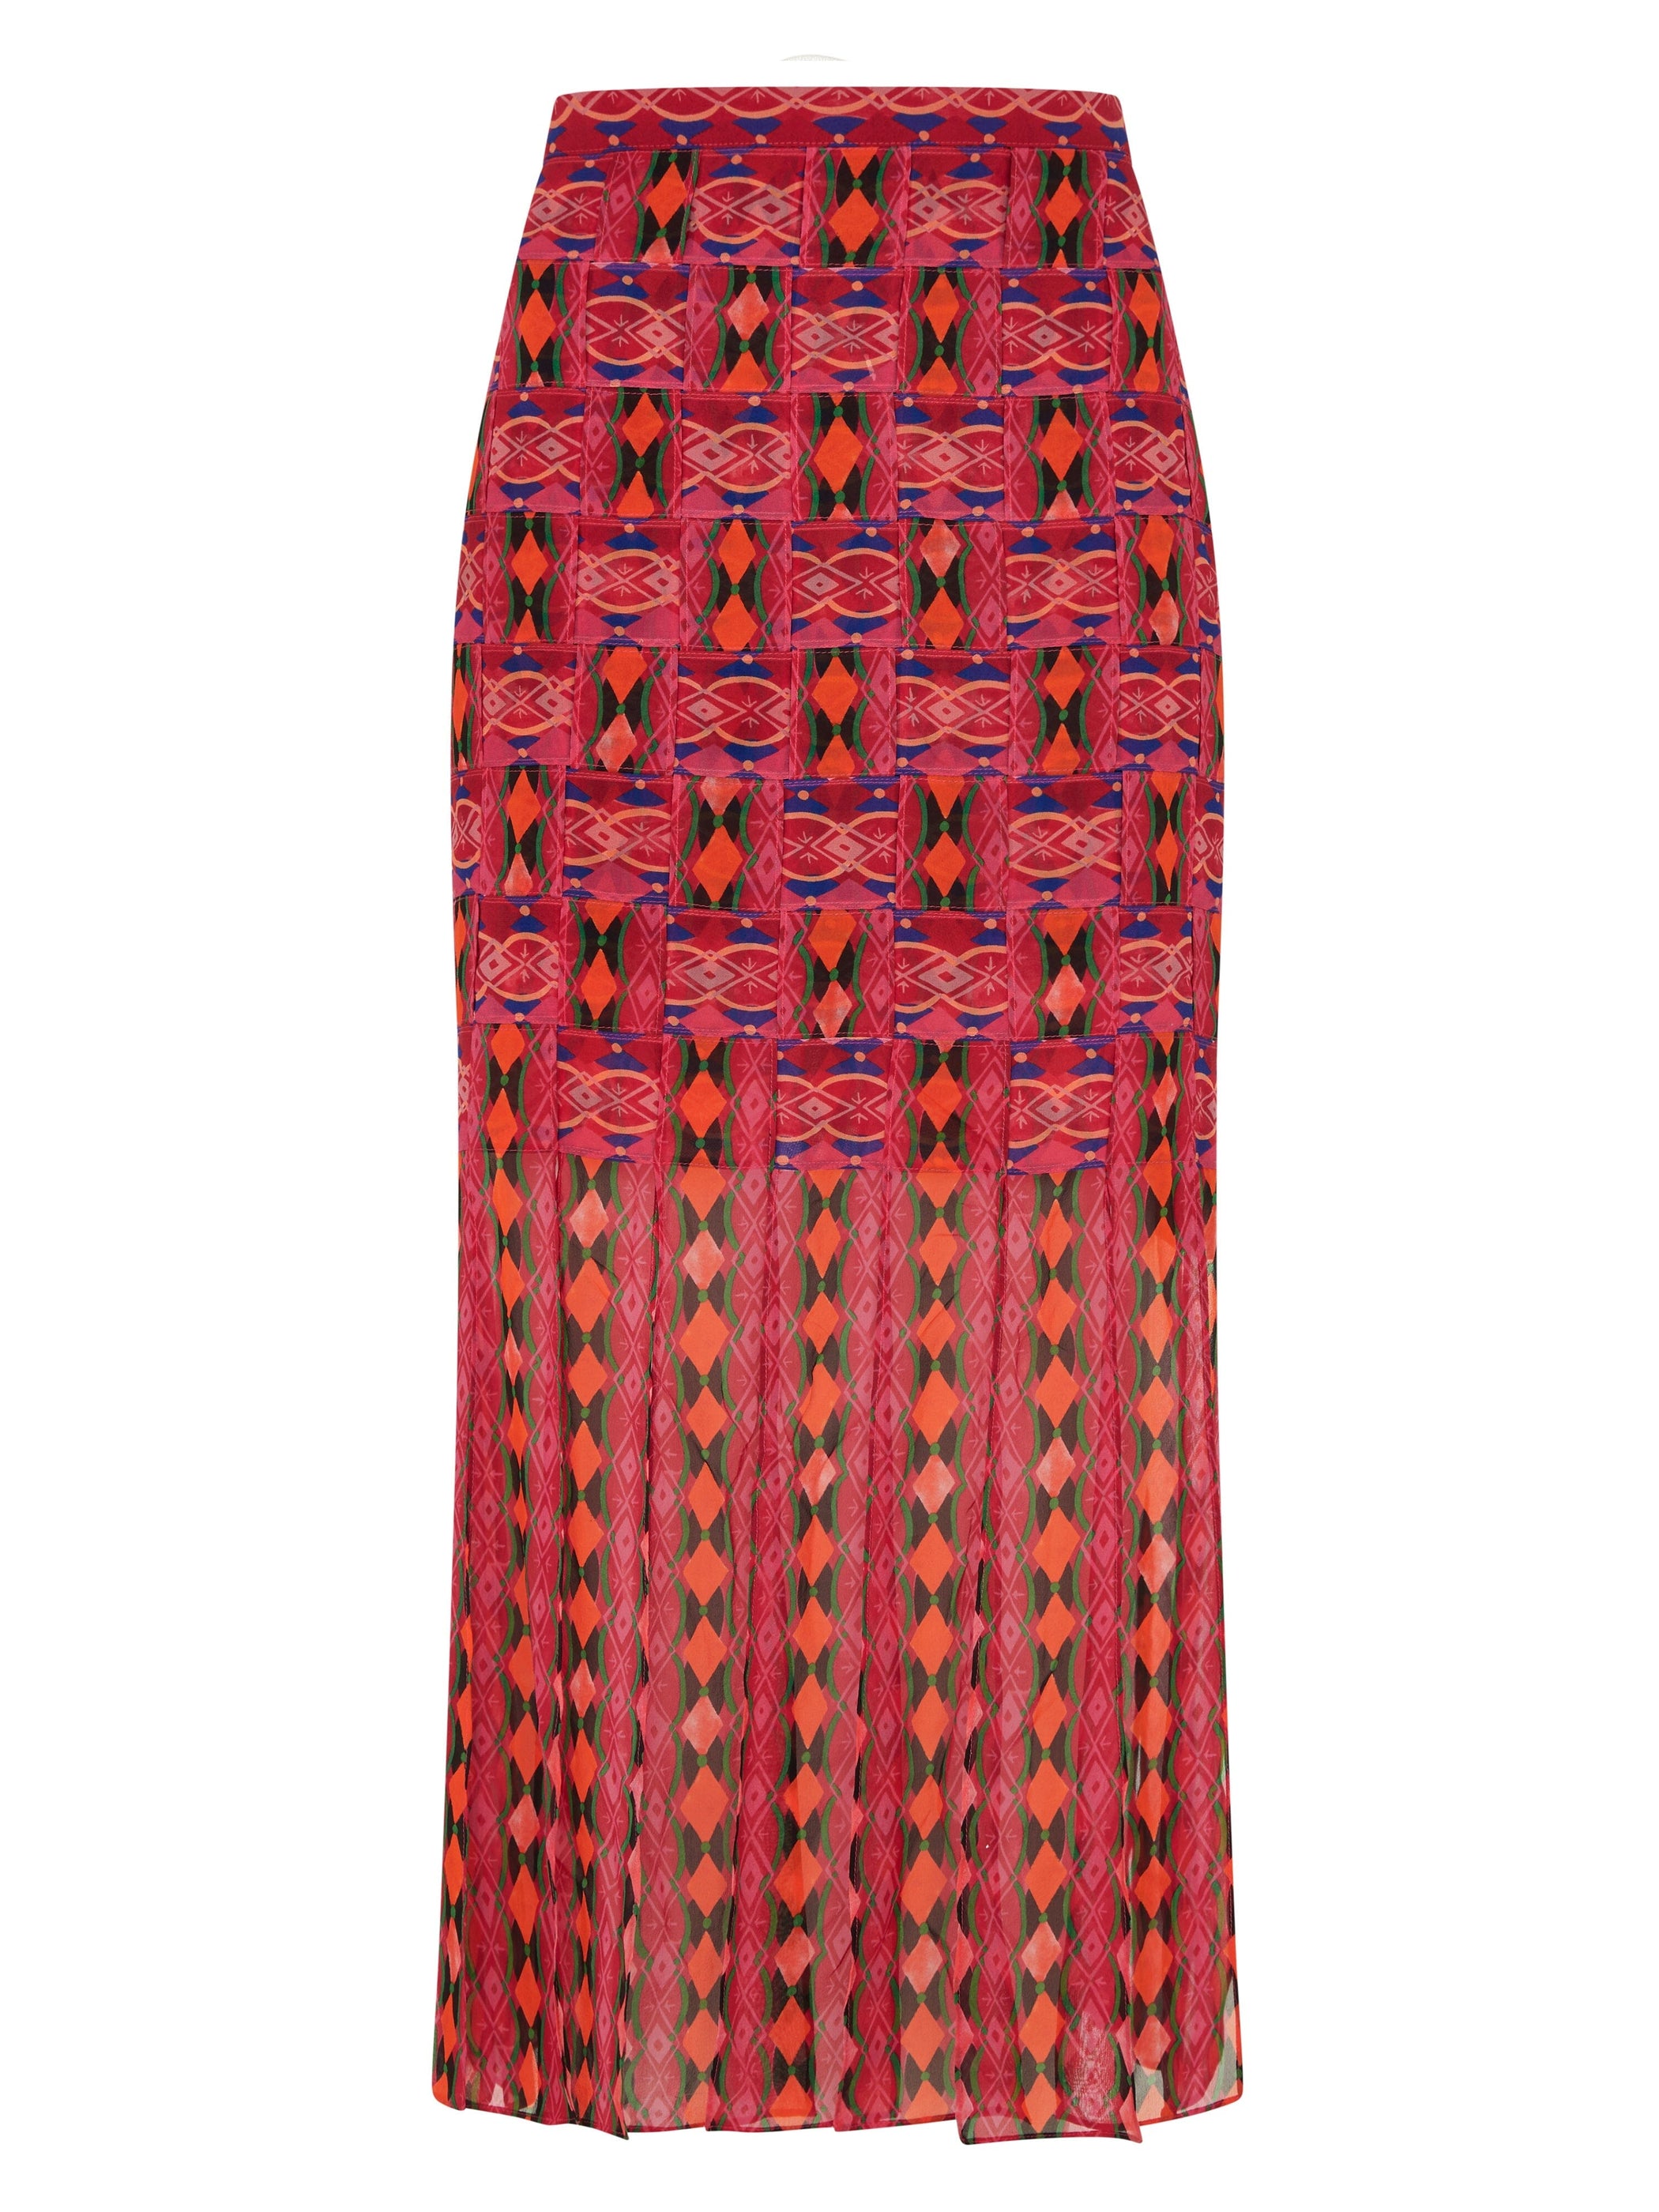 Diana Basketweave Skirt in Stripe print